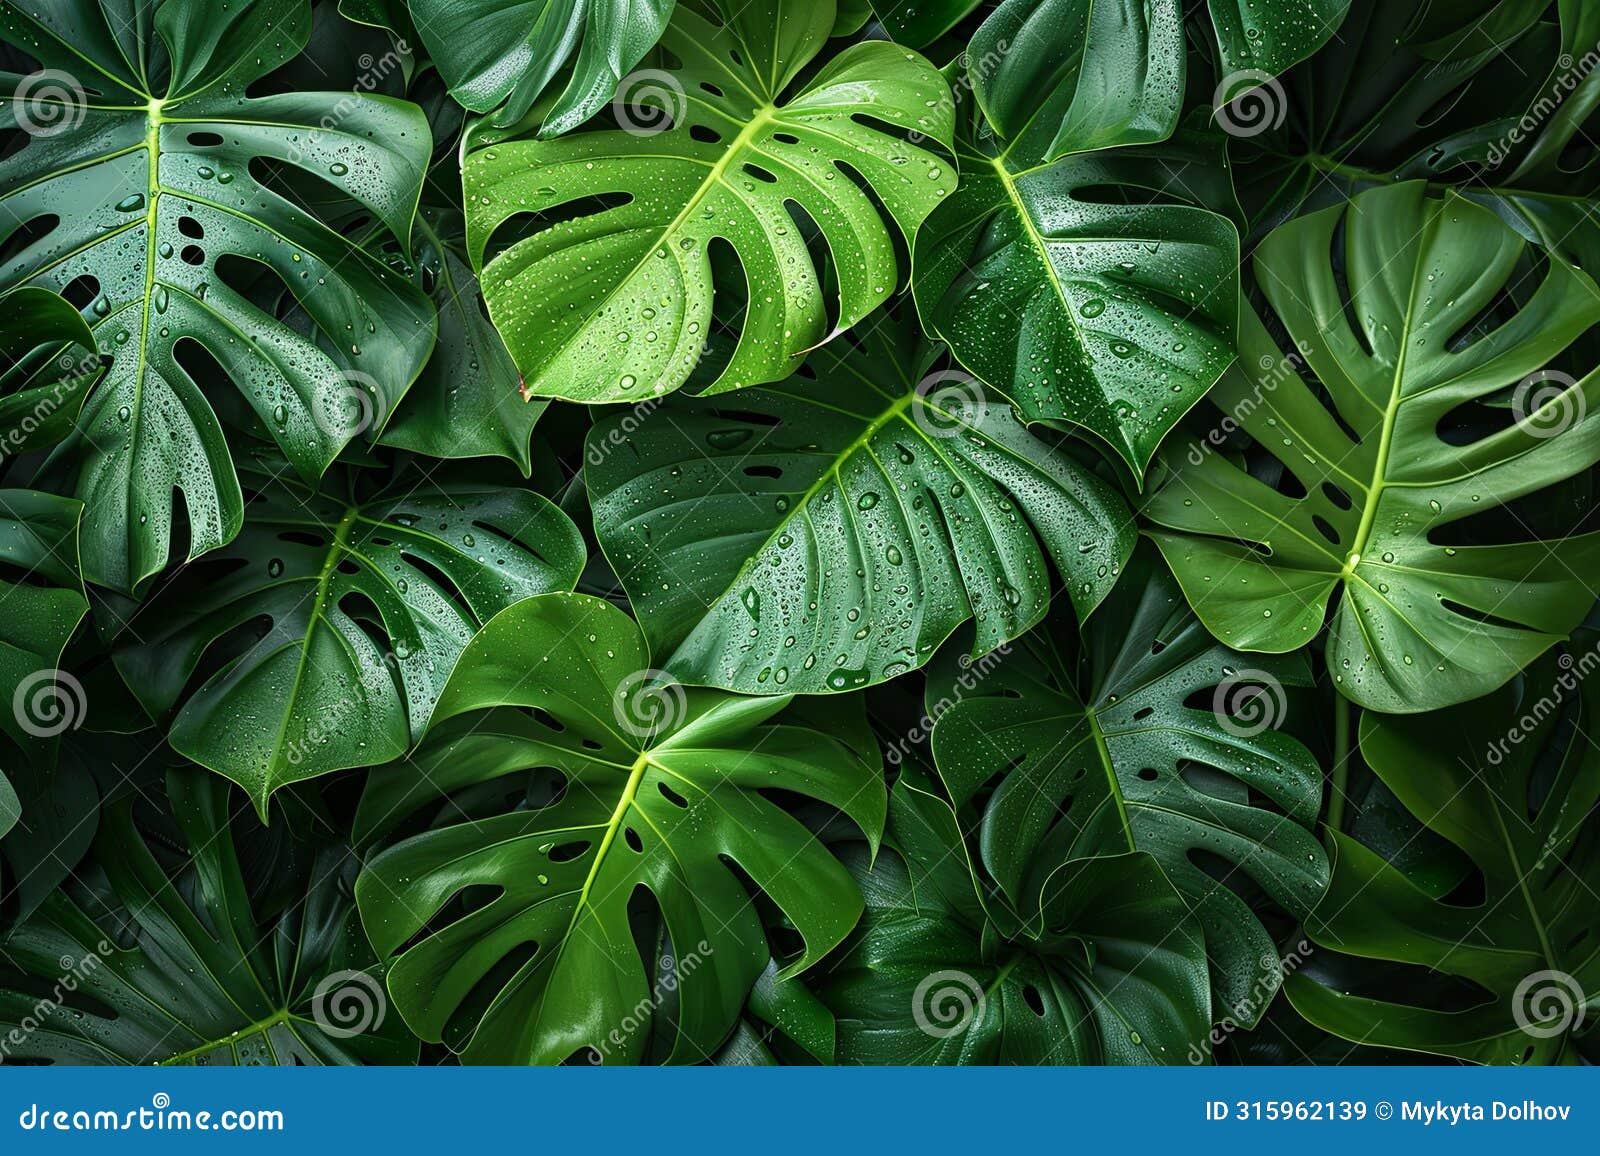 lush green plant with abundant leaves